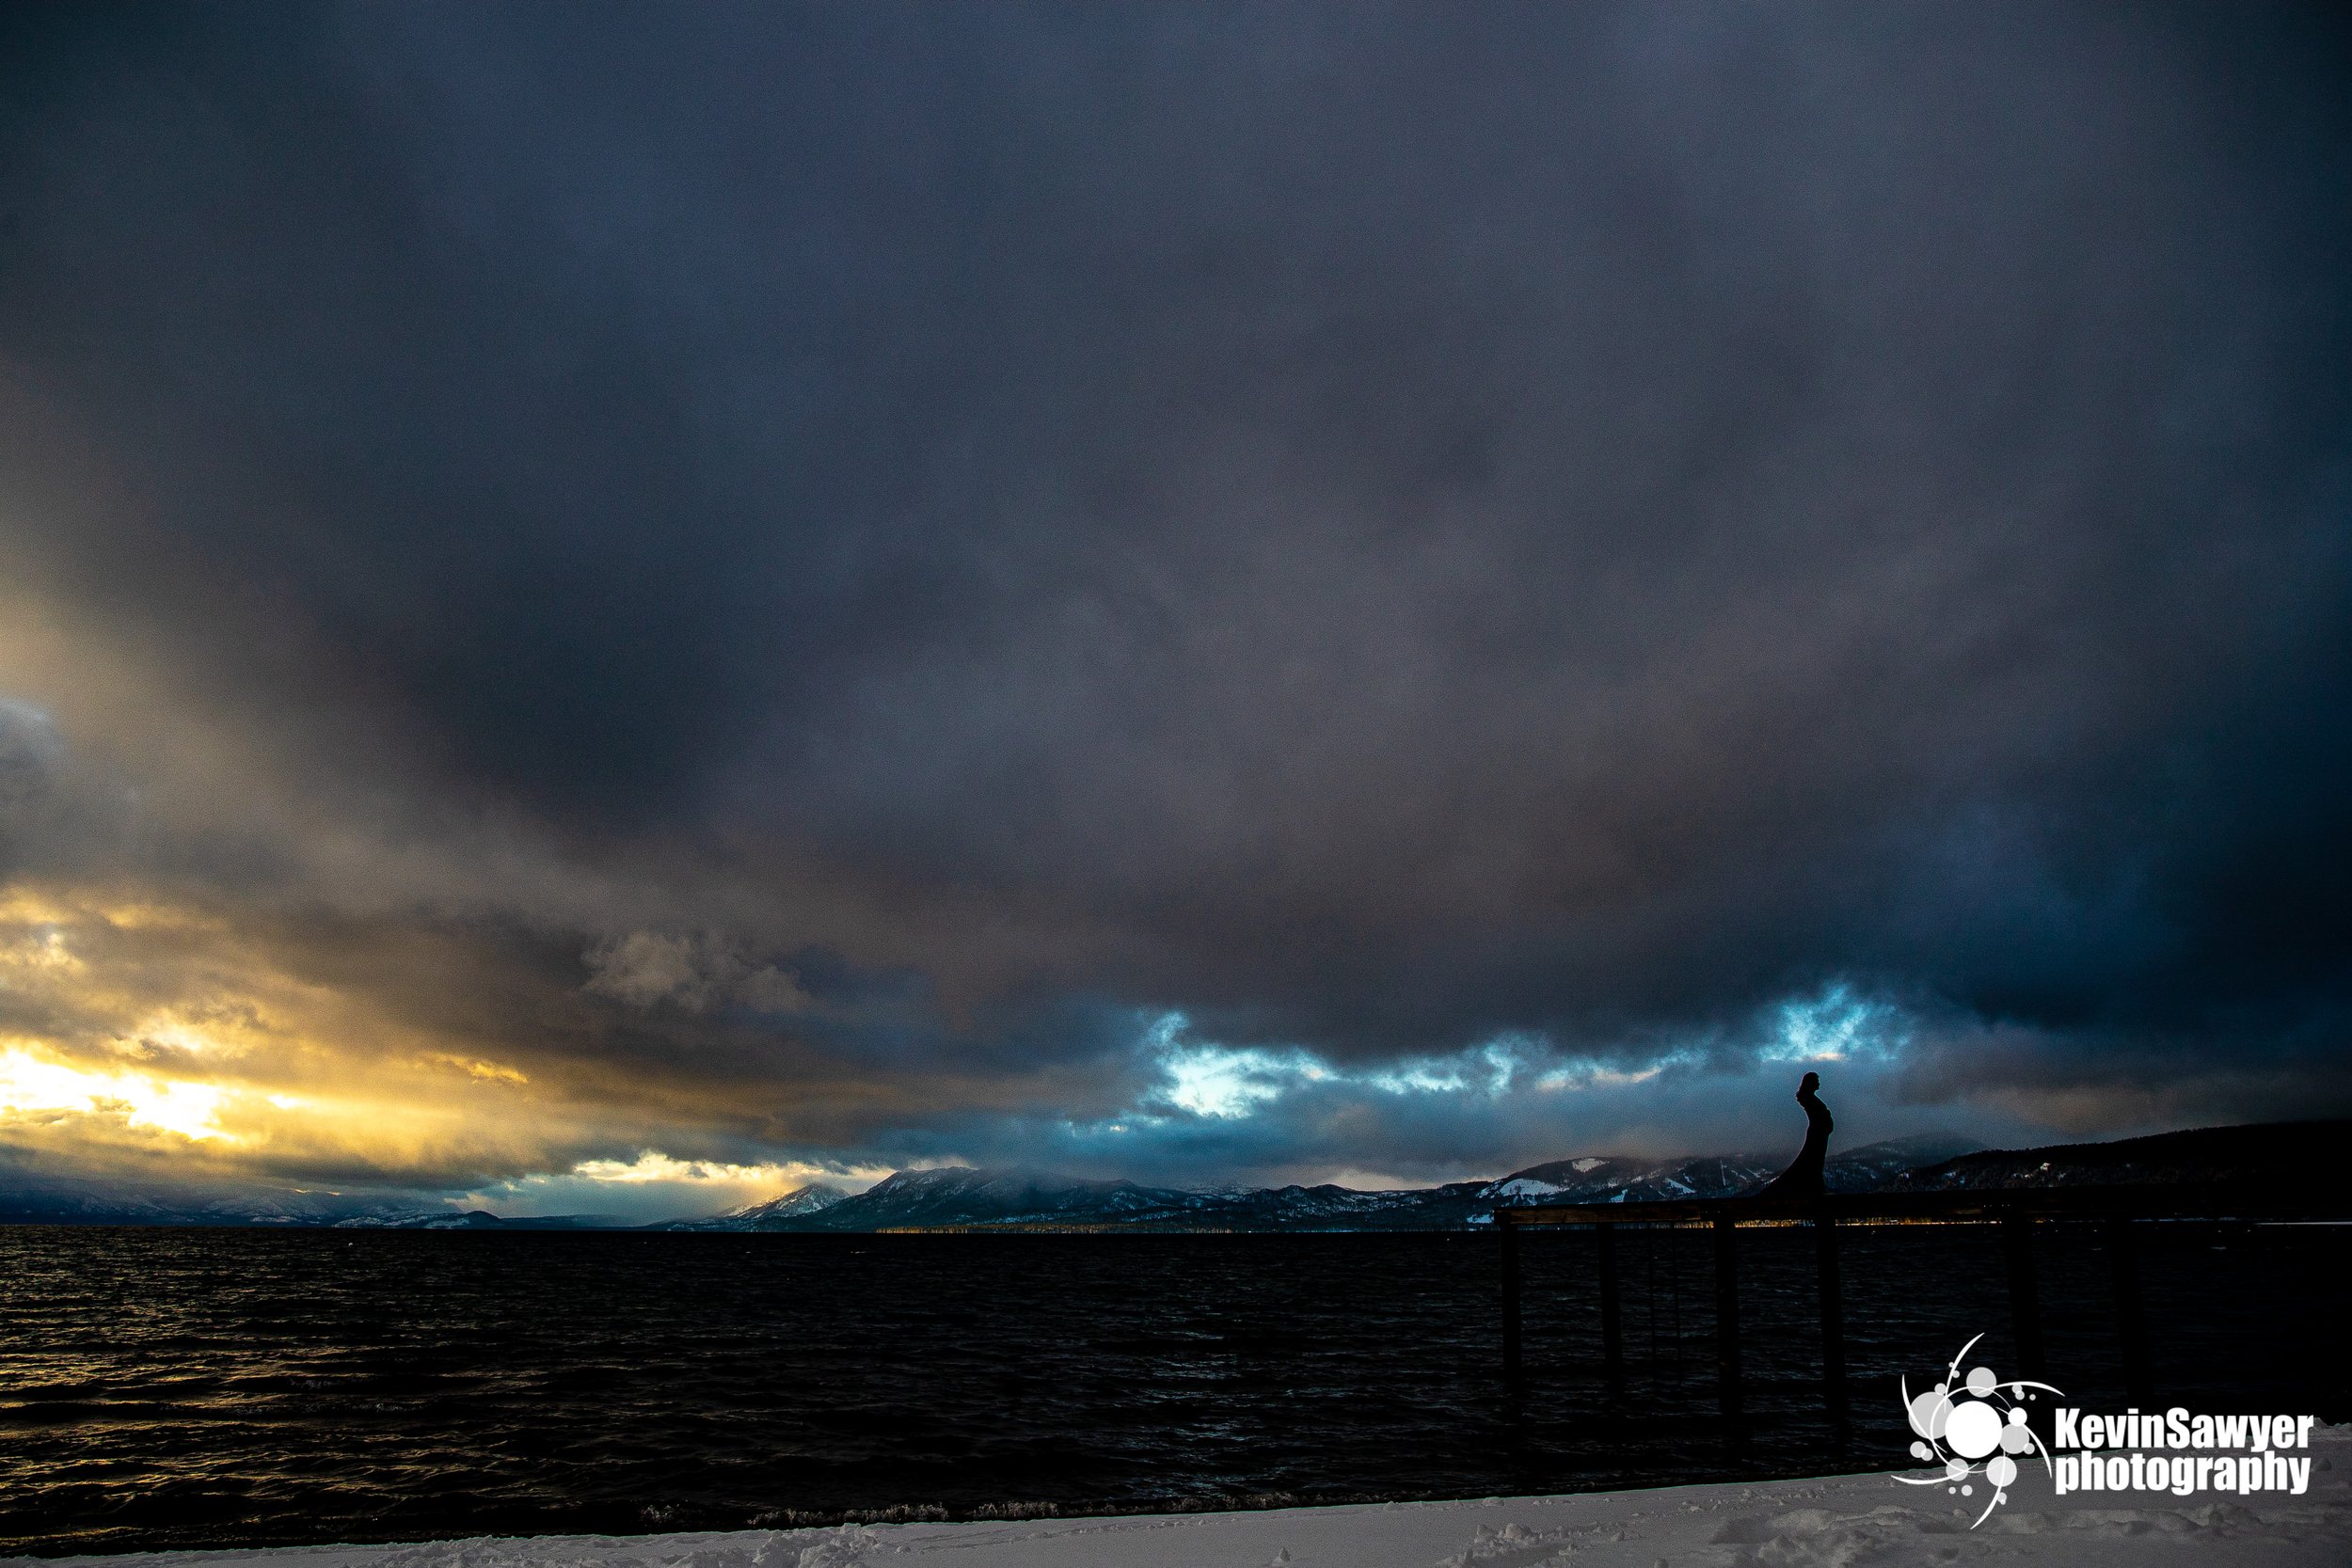 lake-tahoe-maternity-photographer-photography-winter-snow-truckee-reno-photos